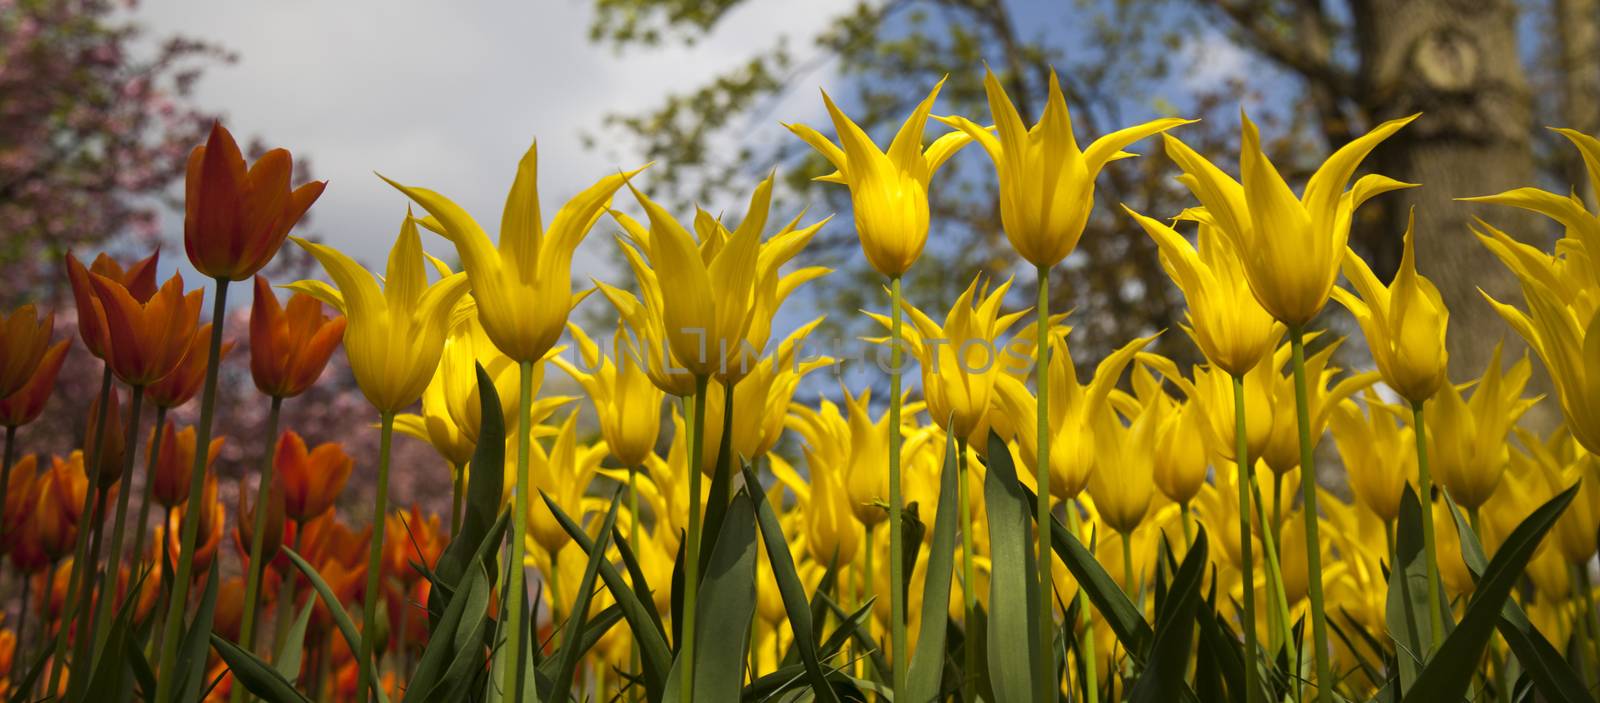 Spring tulips in the garden, spring blossom by JanPietruszka